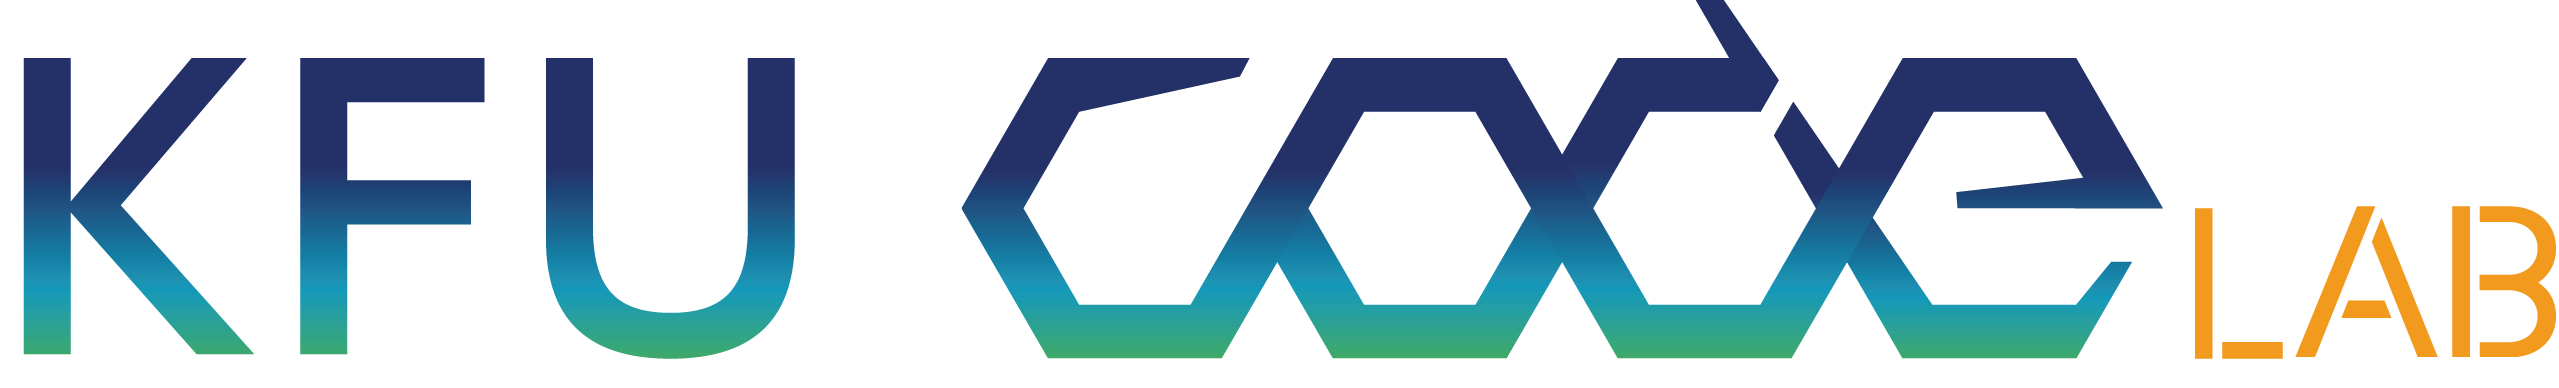 KFU sub Logo